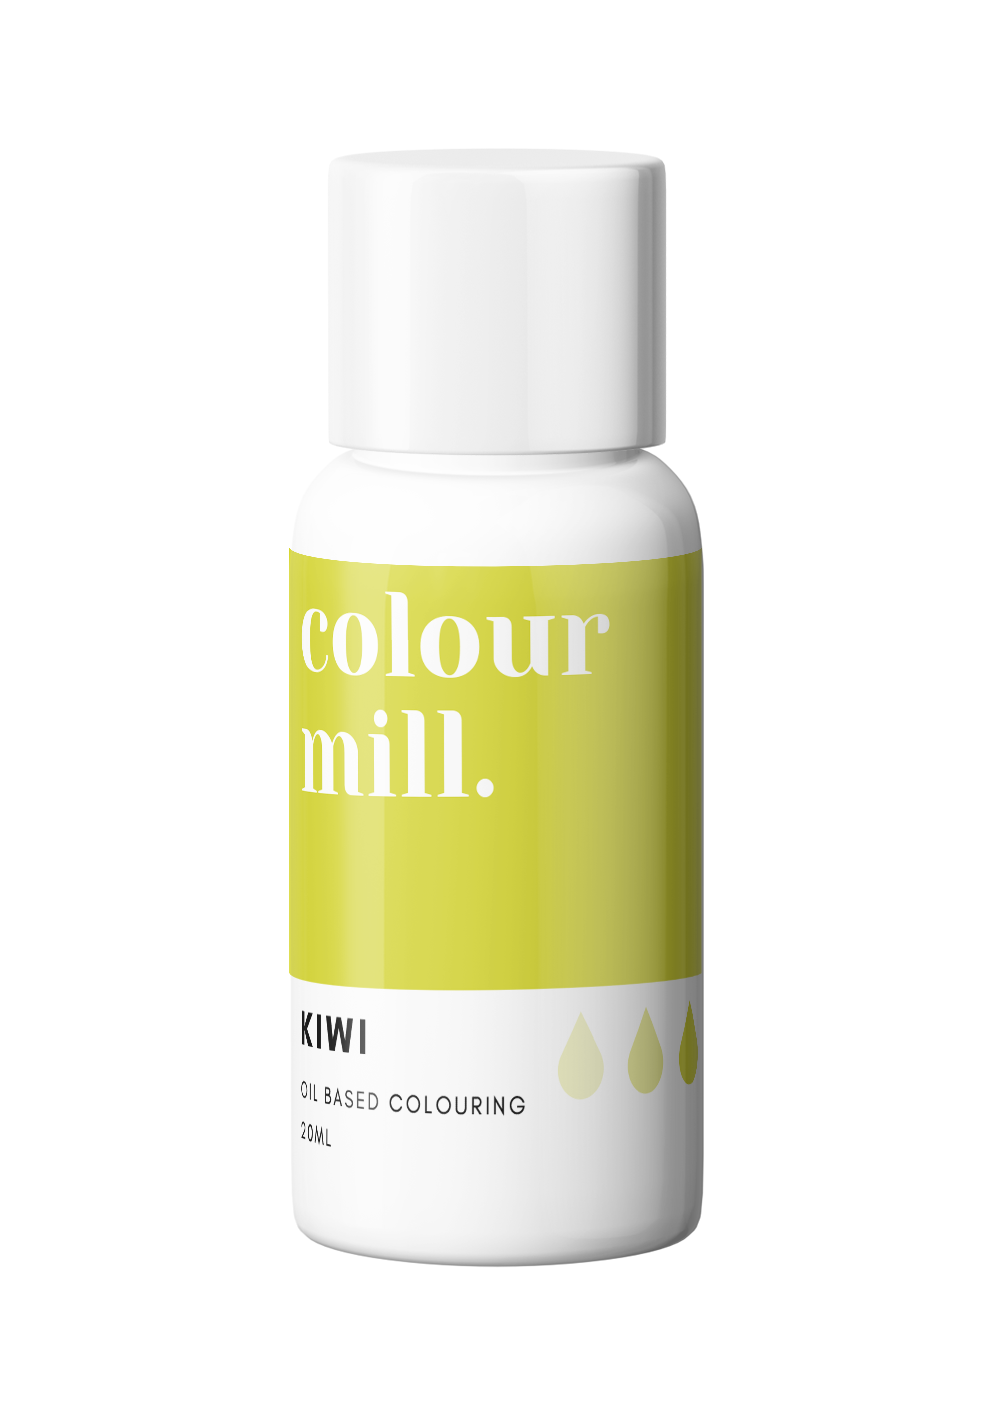 Colour Mill Oil Based Colouring 20ml - Kiwi